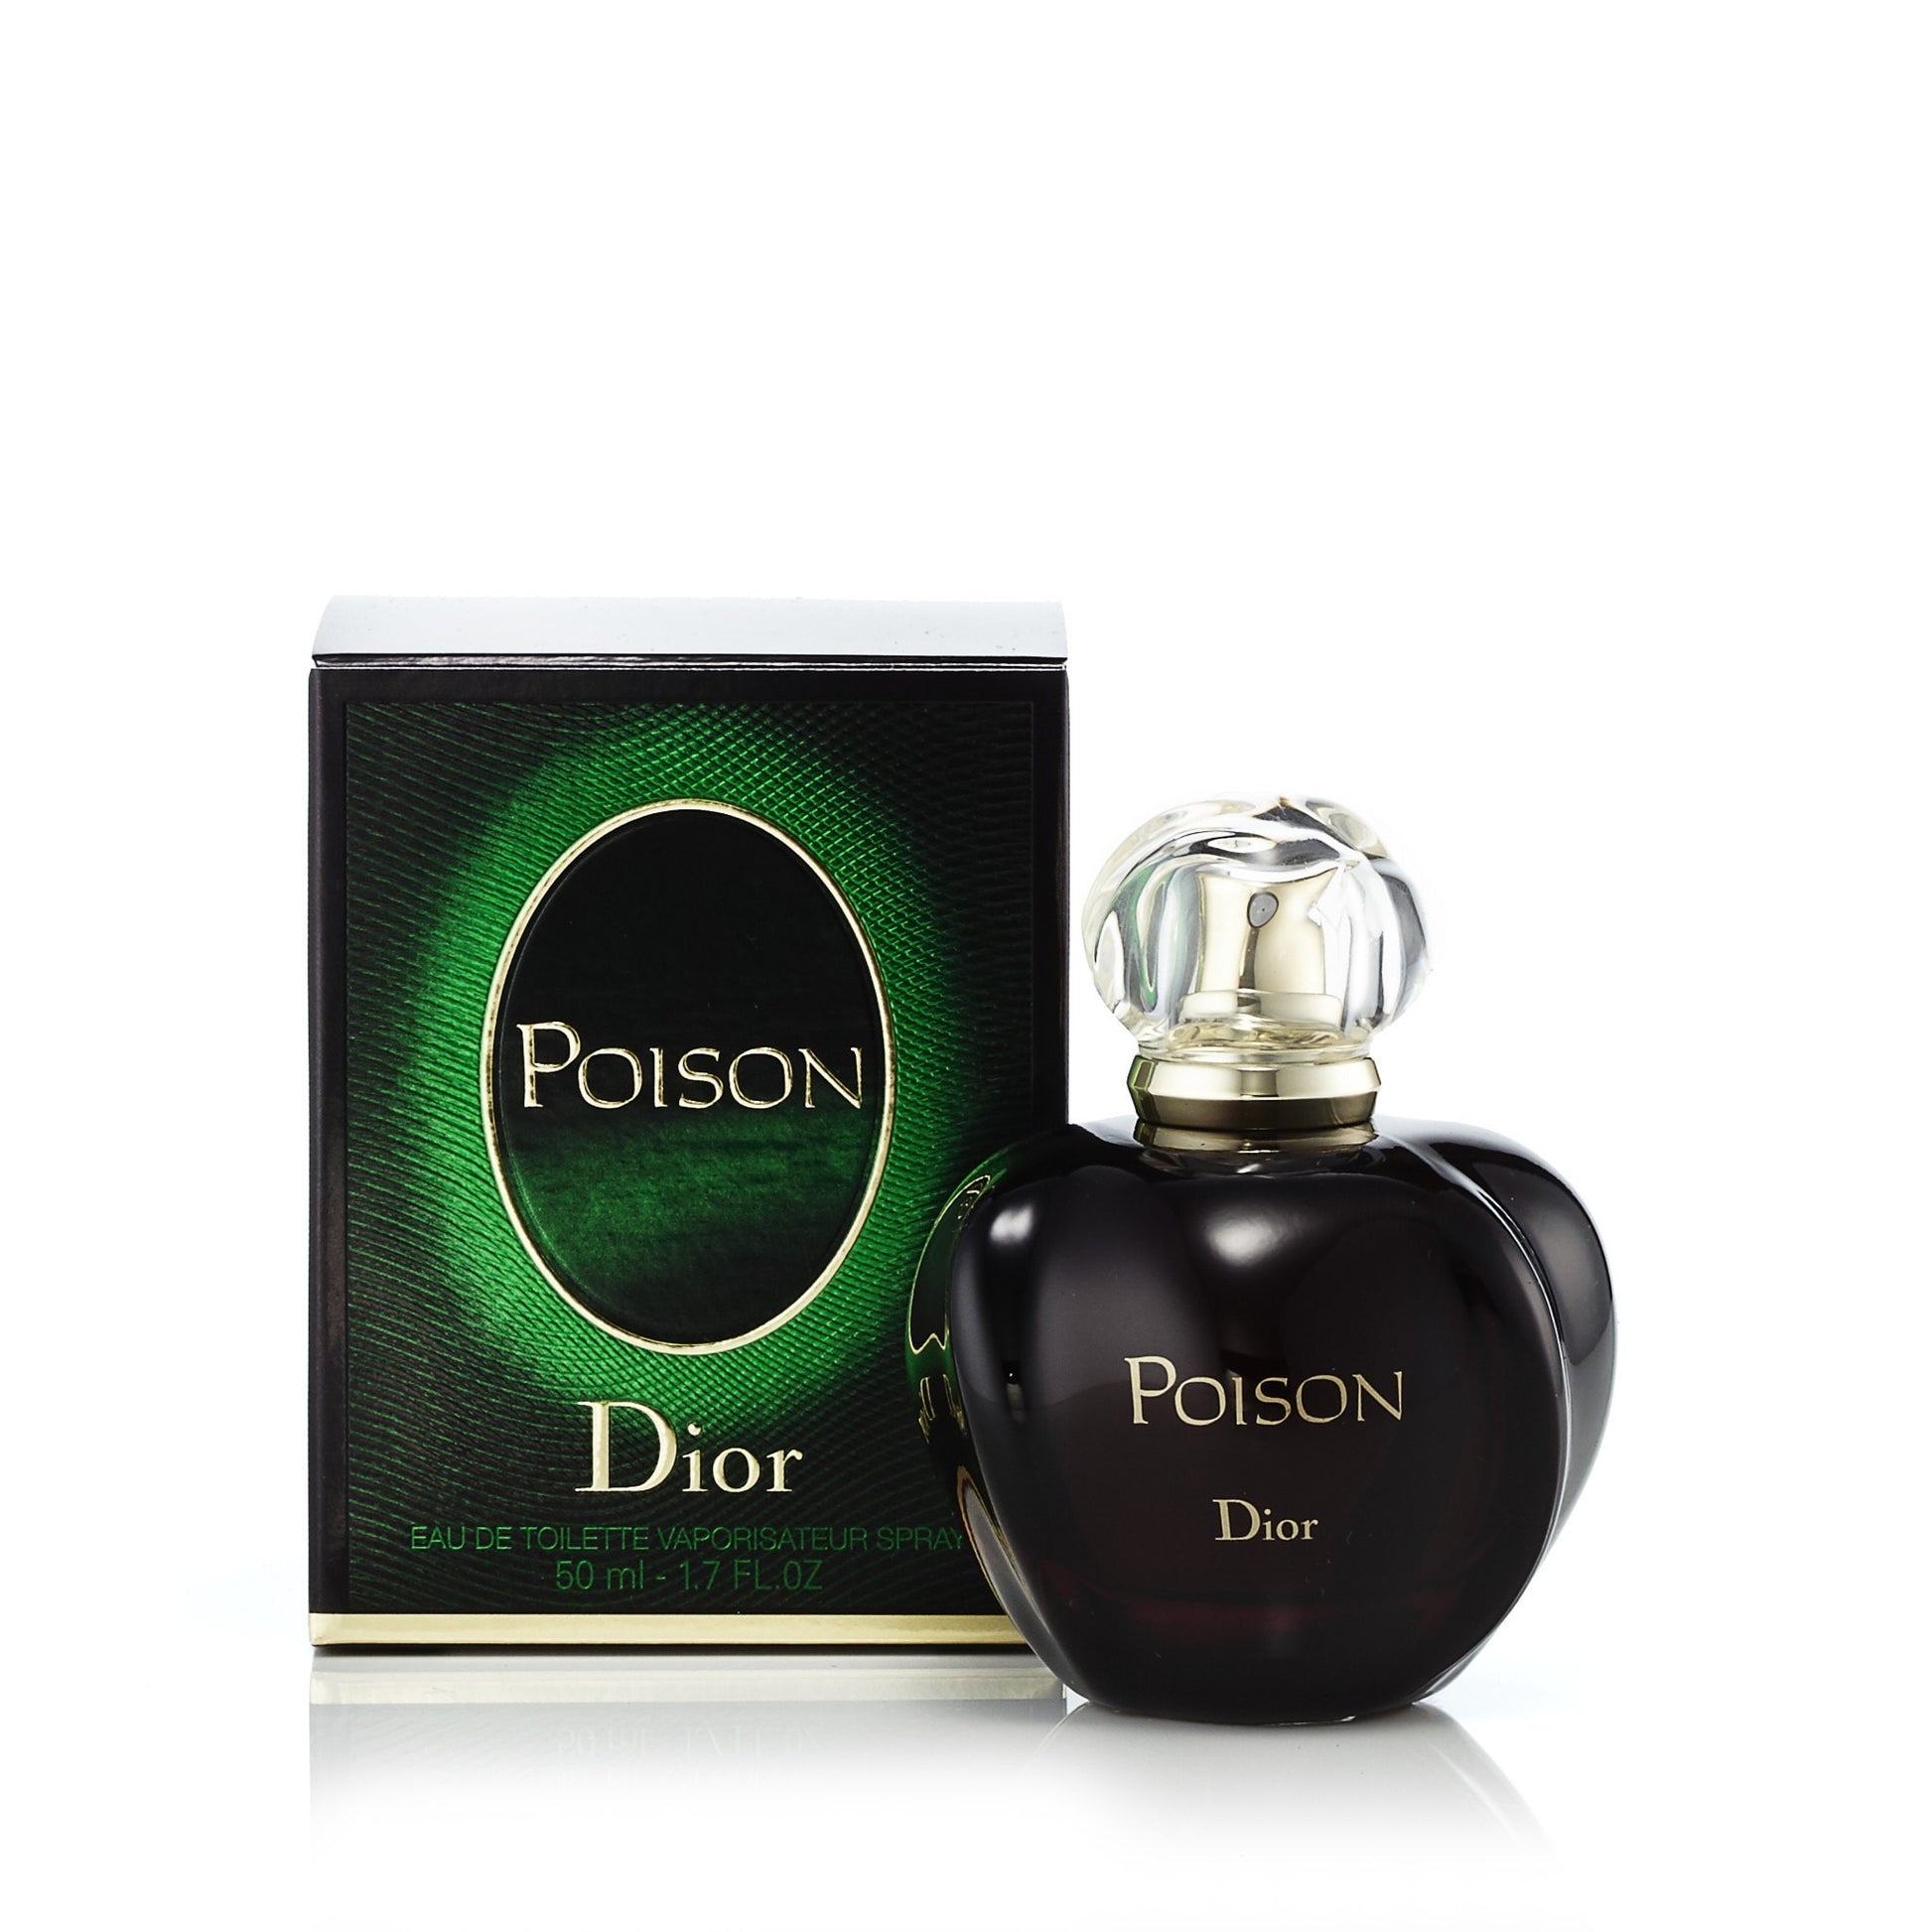  Poison Eau de Toilette Spray for Women by Dior 1.7 oz. Click to open in modal